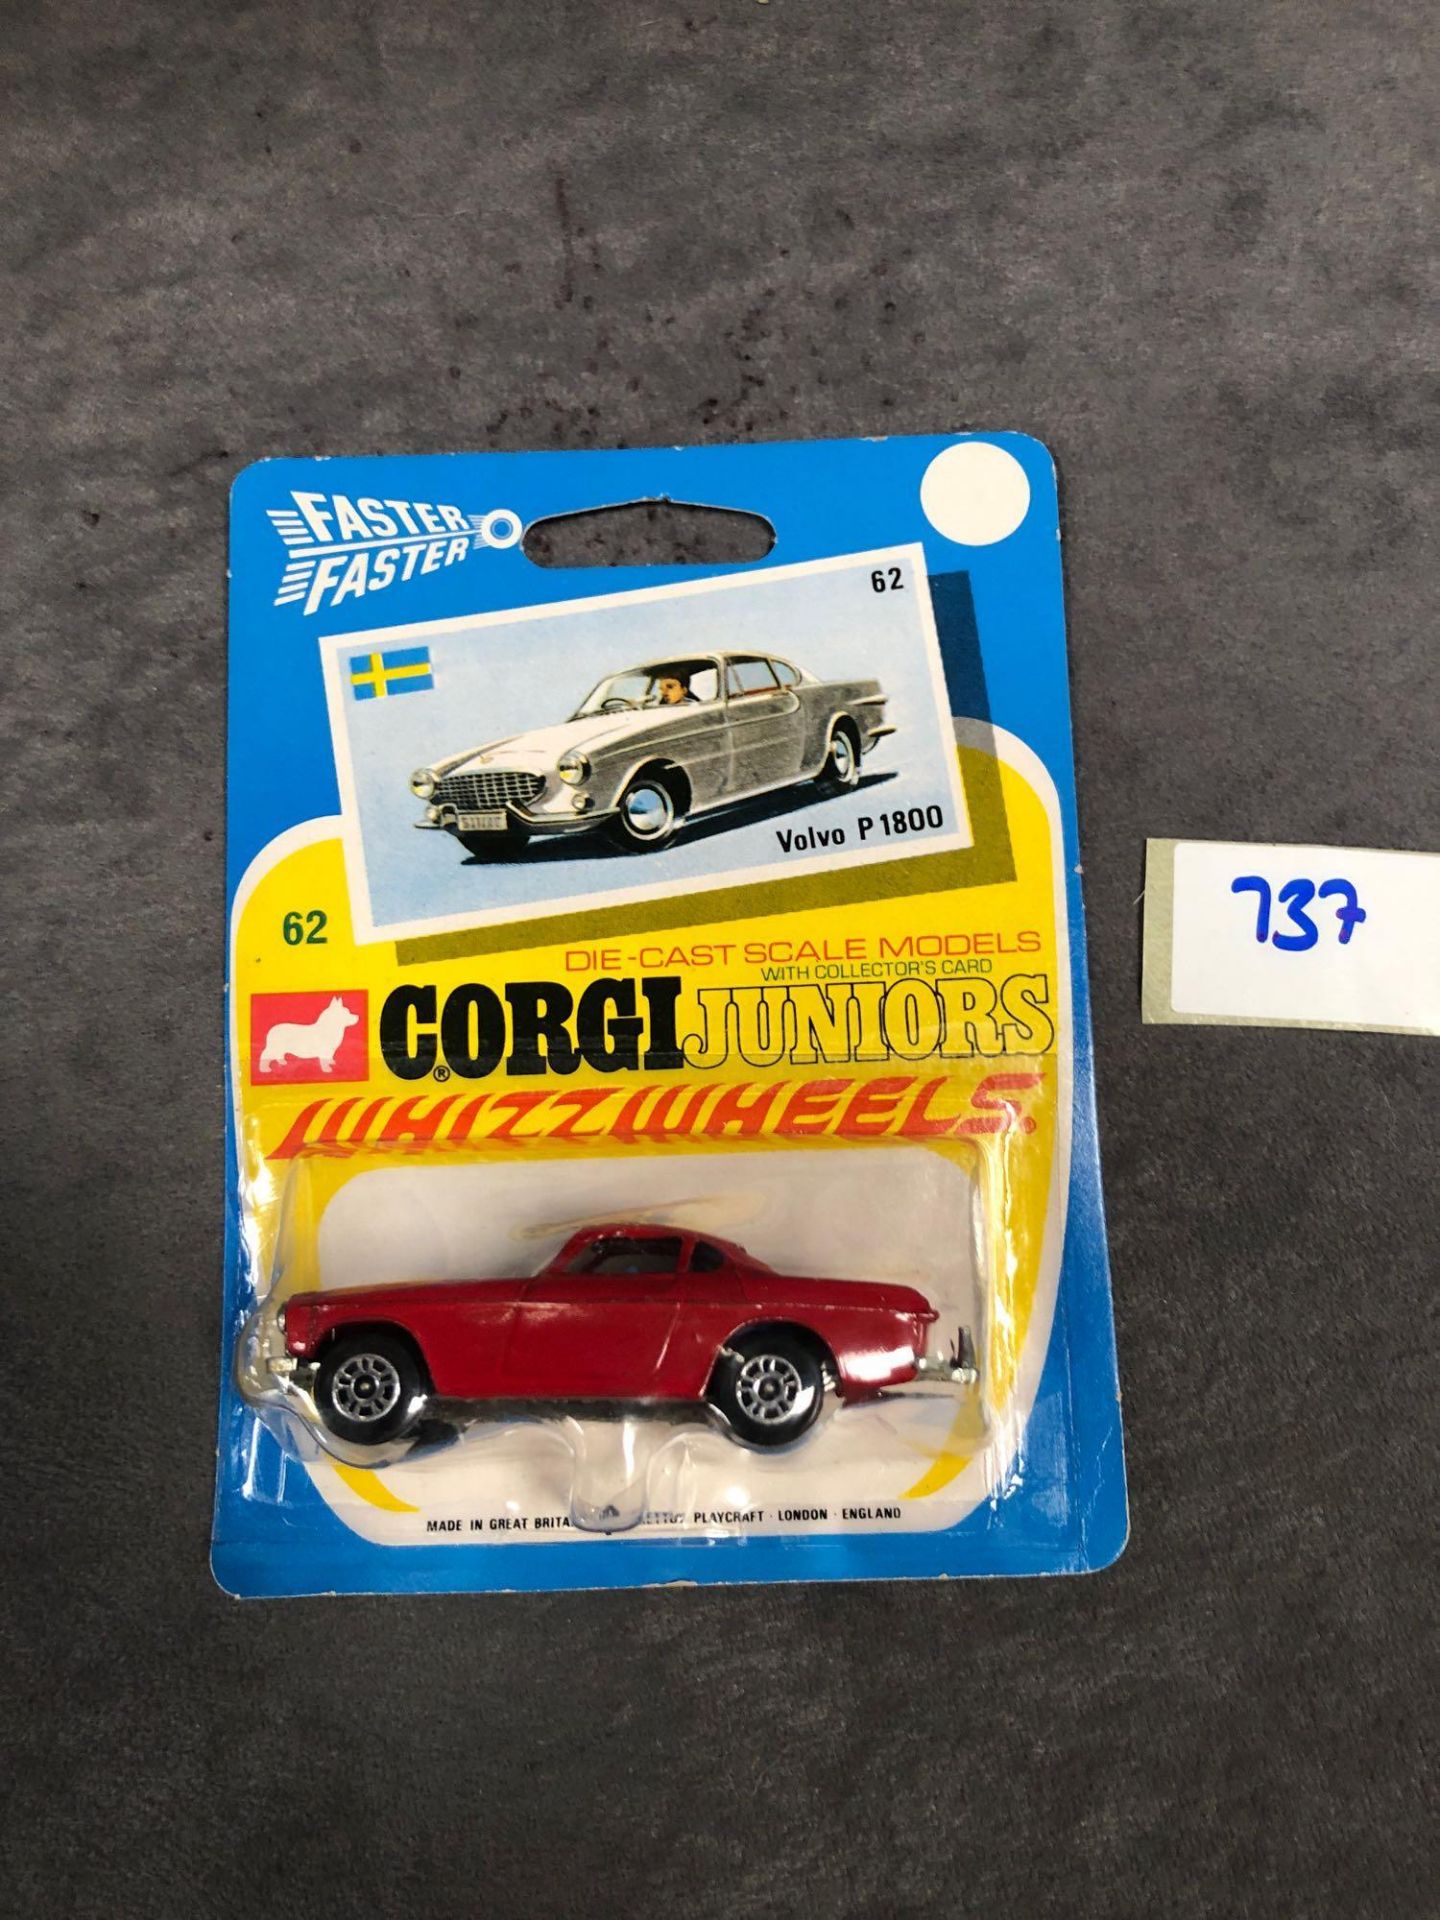 Corgi Juniors Whizzwheels Diecast #62 Volvo P1800 On Card